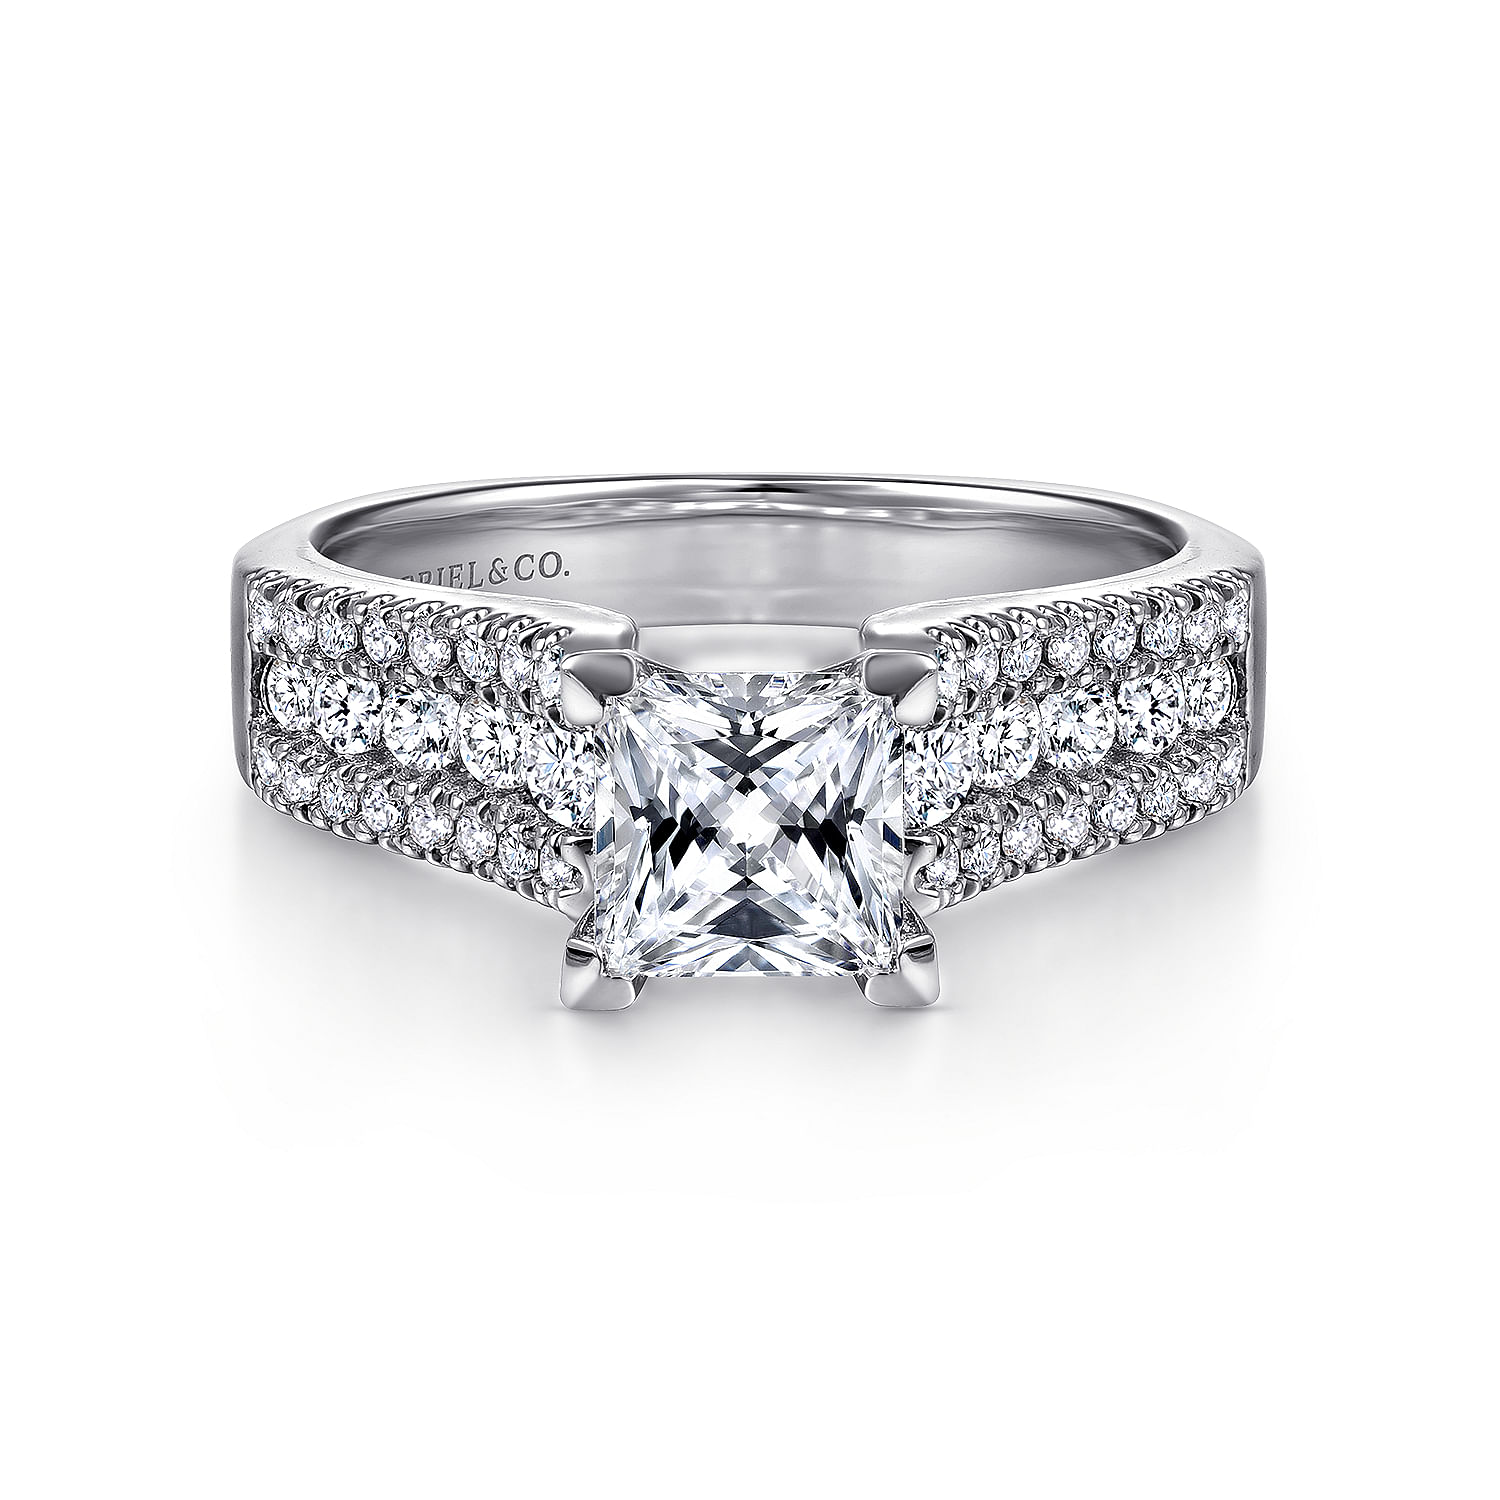 Channing - 14K White Gold Wide Band Princess Cut Diamond Engagement Ring